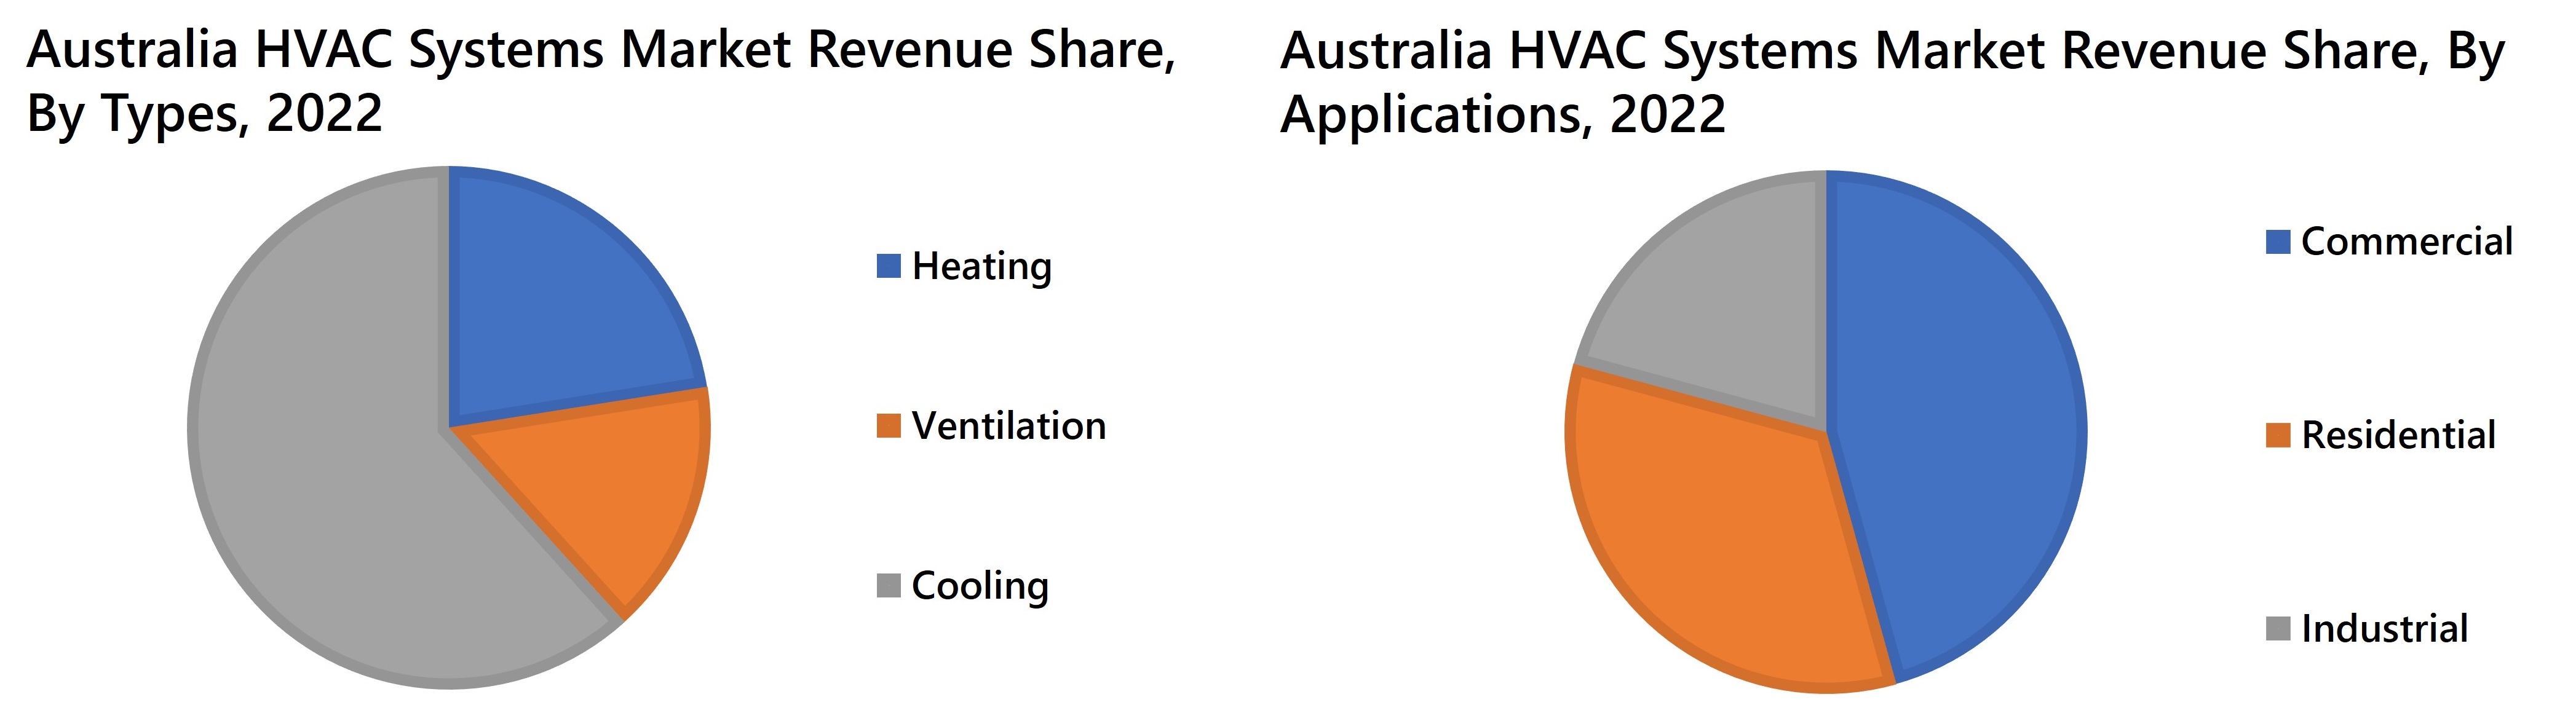 Australia HVAC Systems Market Revenue Share